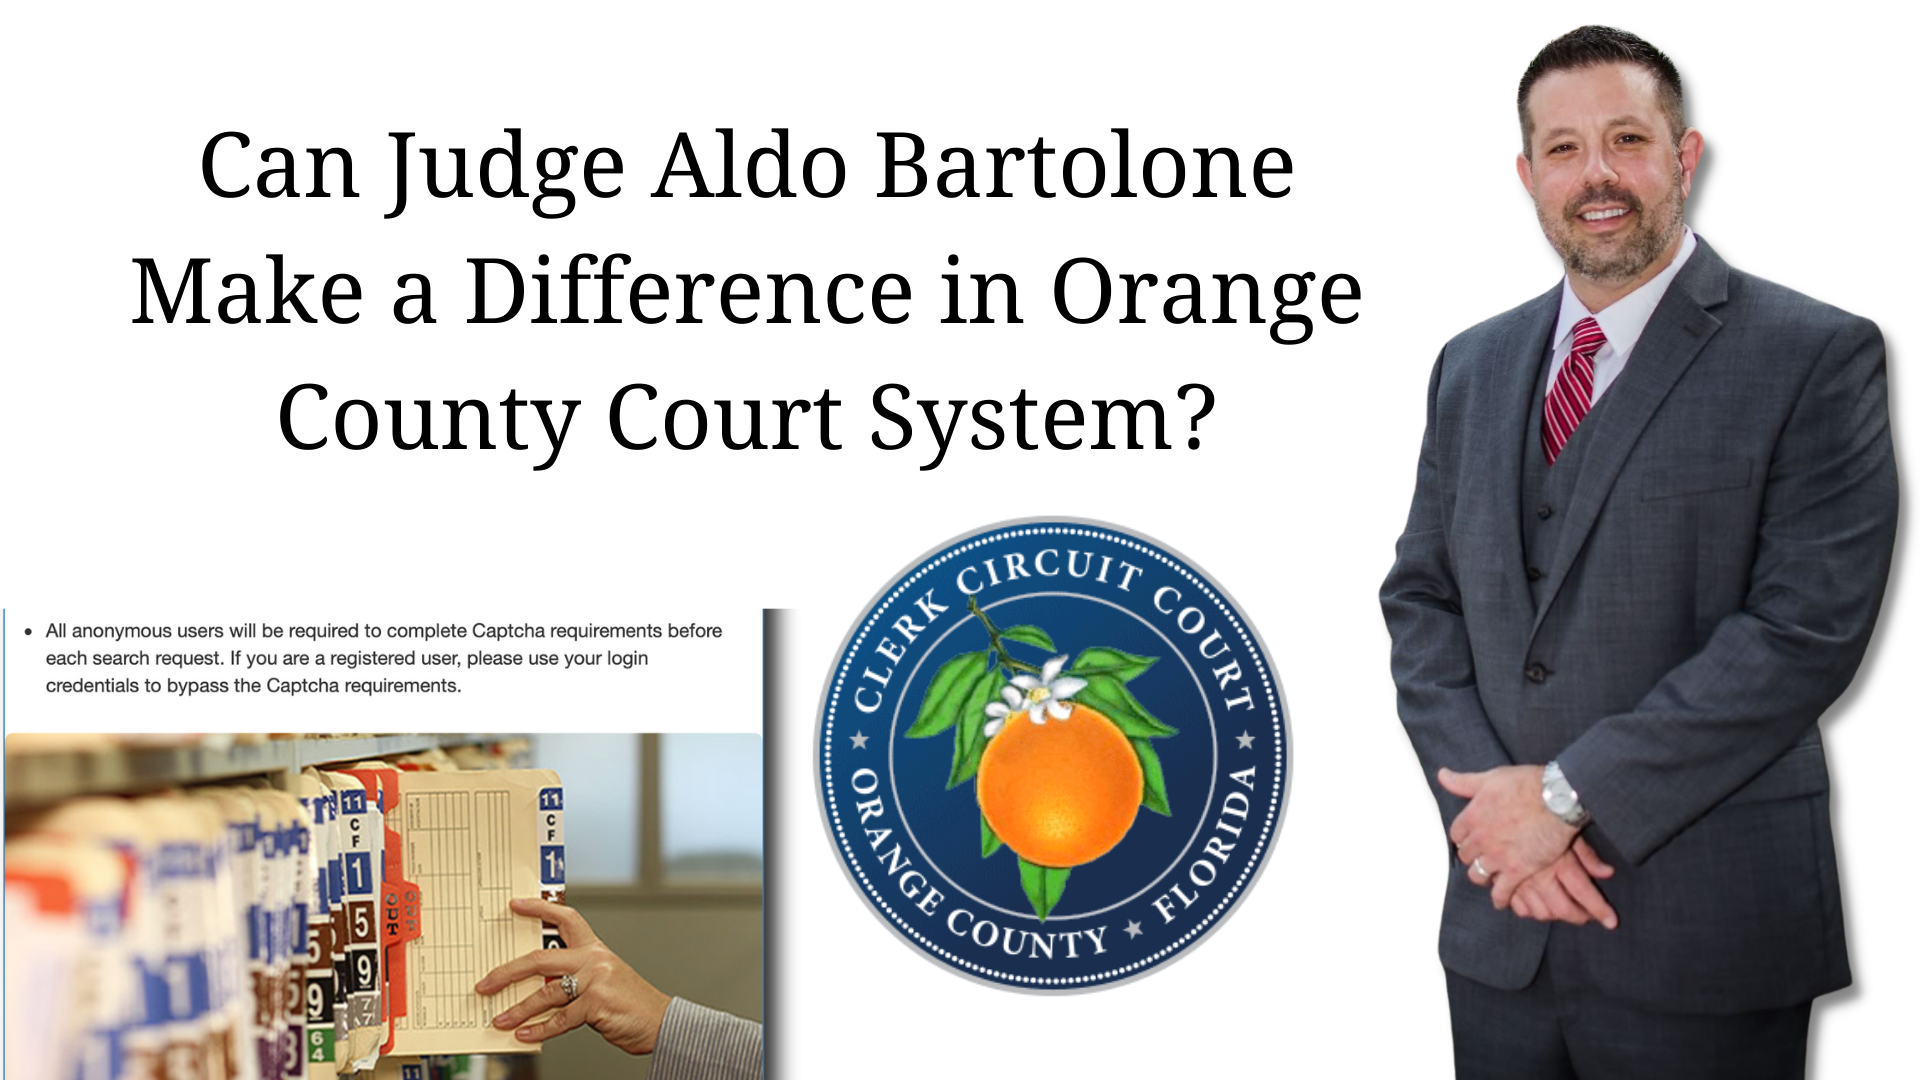 Can Judge Aldo Bartolone Make a Difference in Orange County Court System?